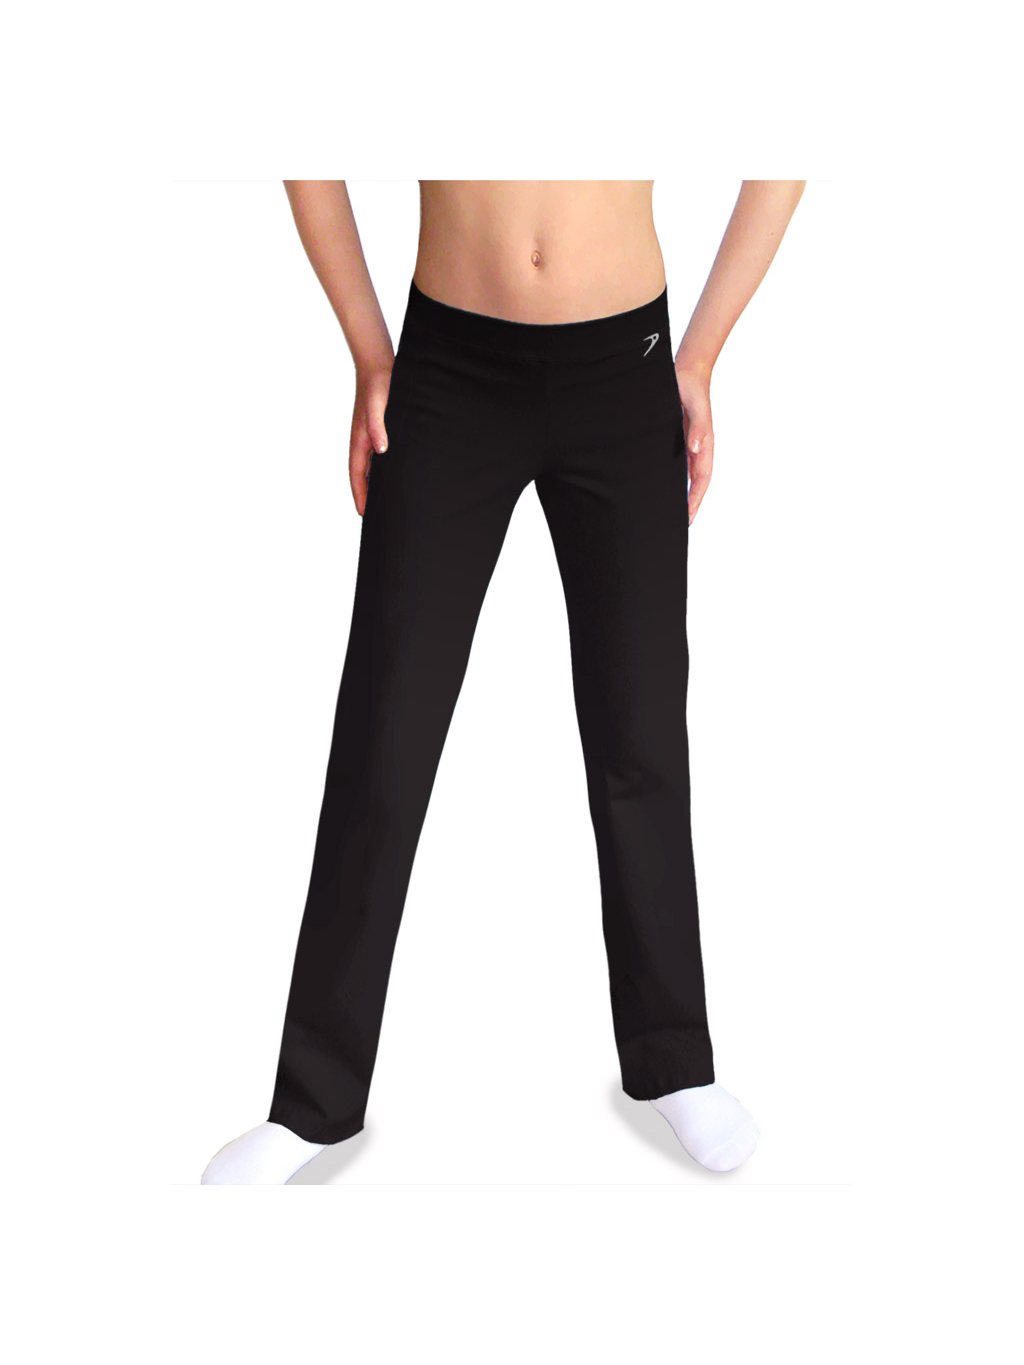 Sportovní kalhoty rovné B36r černá elastická bavlna